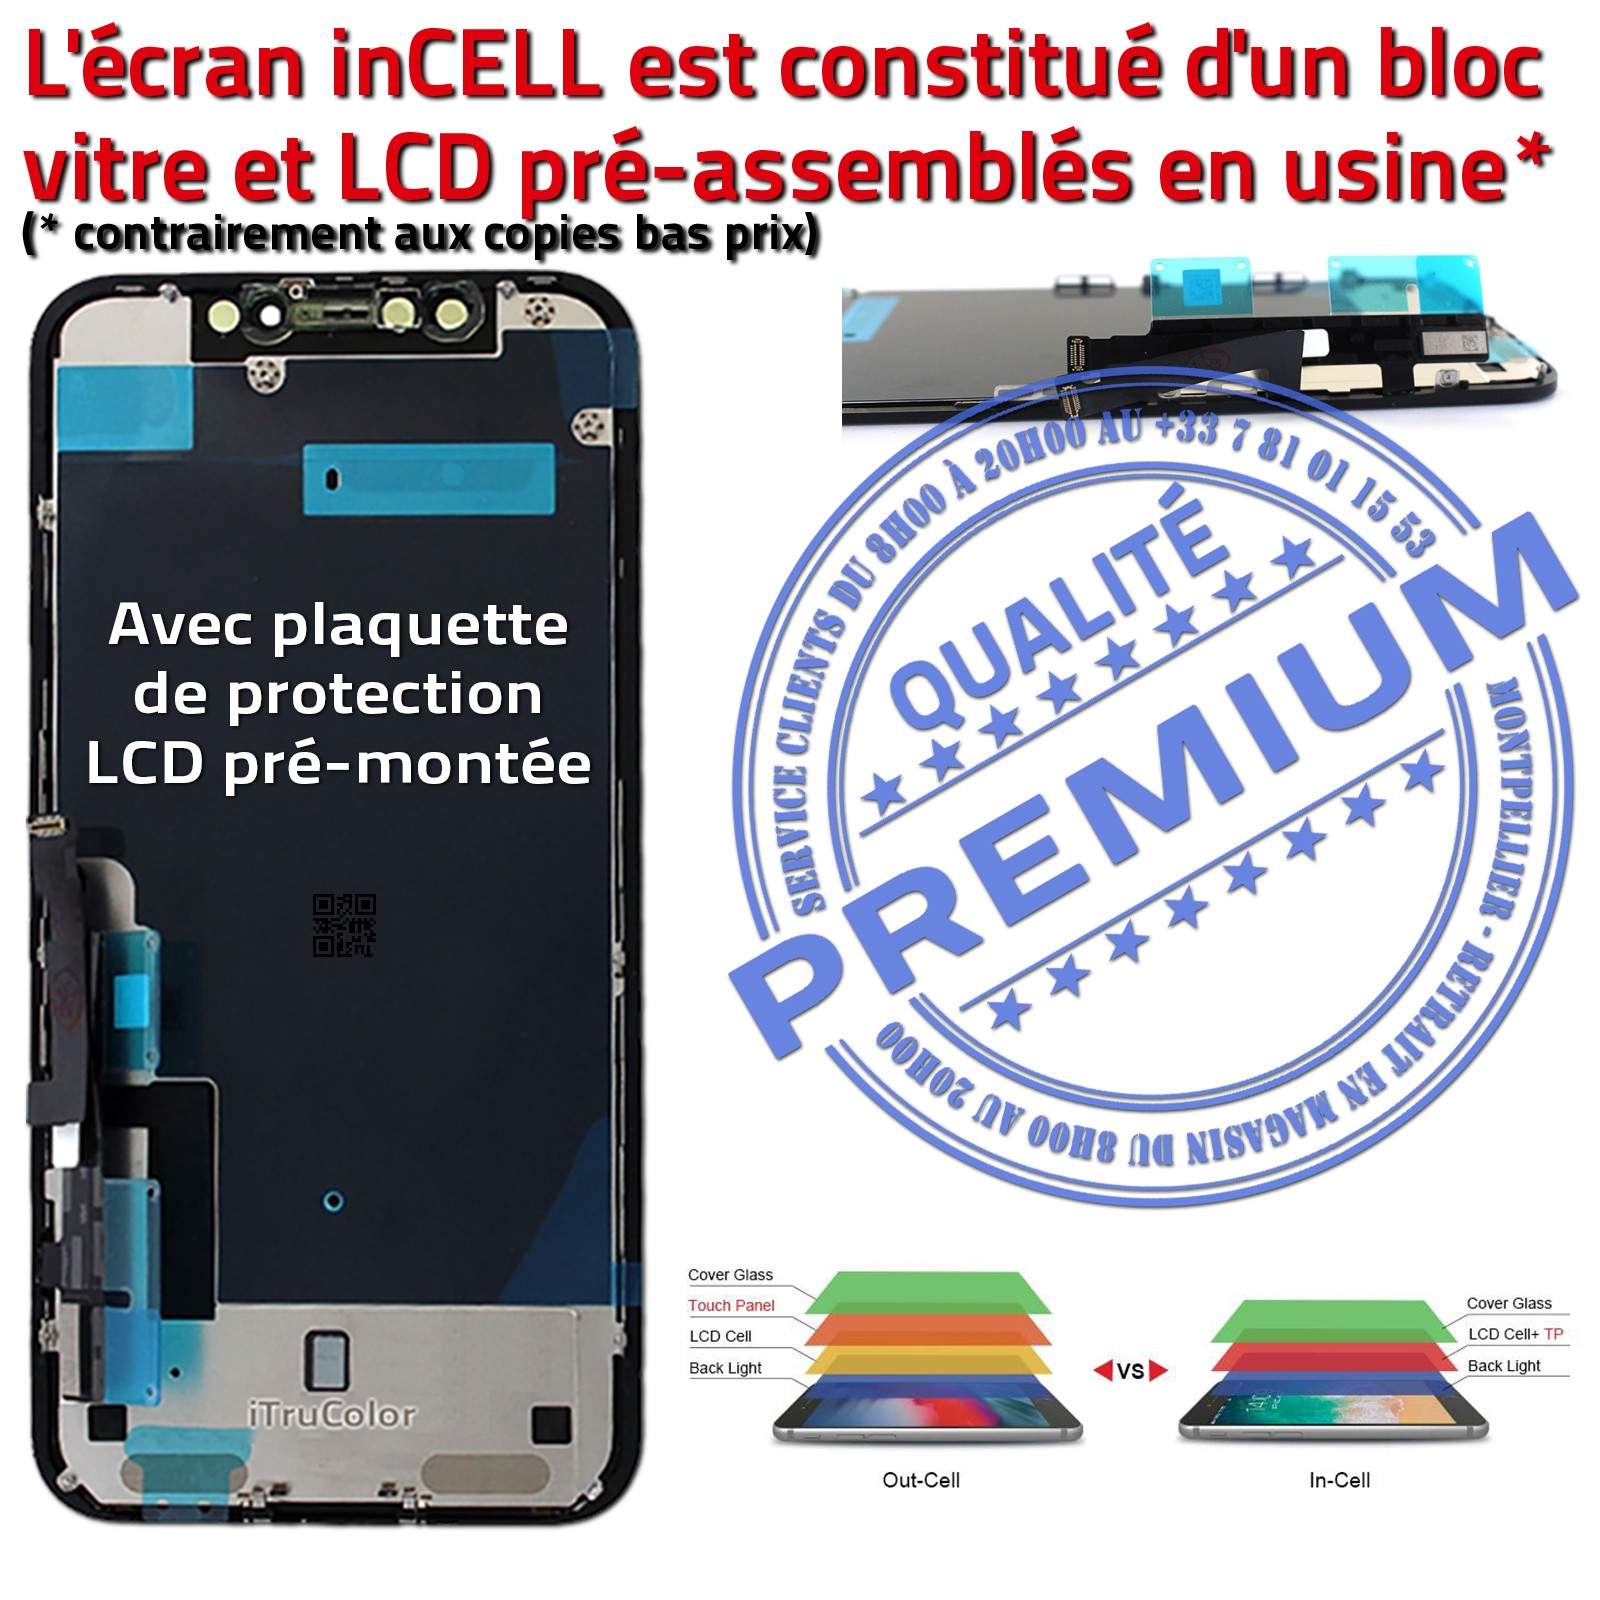 Verre Tactile iPhone A2106 inCELL iTruColor PREMIUM Écran Verre Multi-Touch SmartPhone Affichage True Tone LCD LG HDR Oléophobe